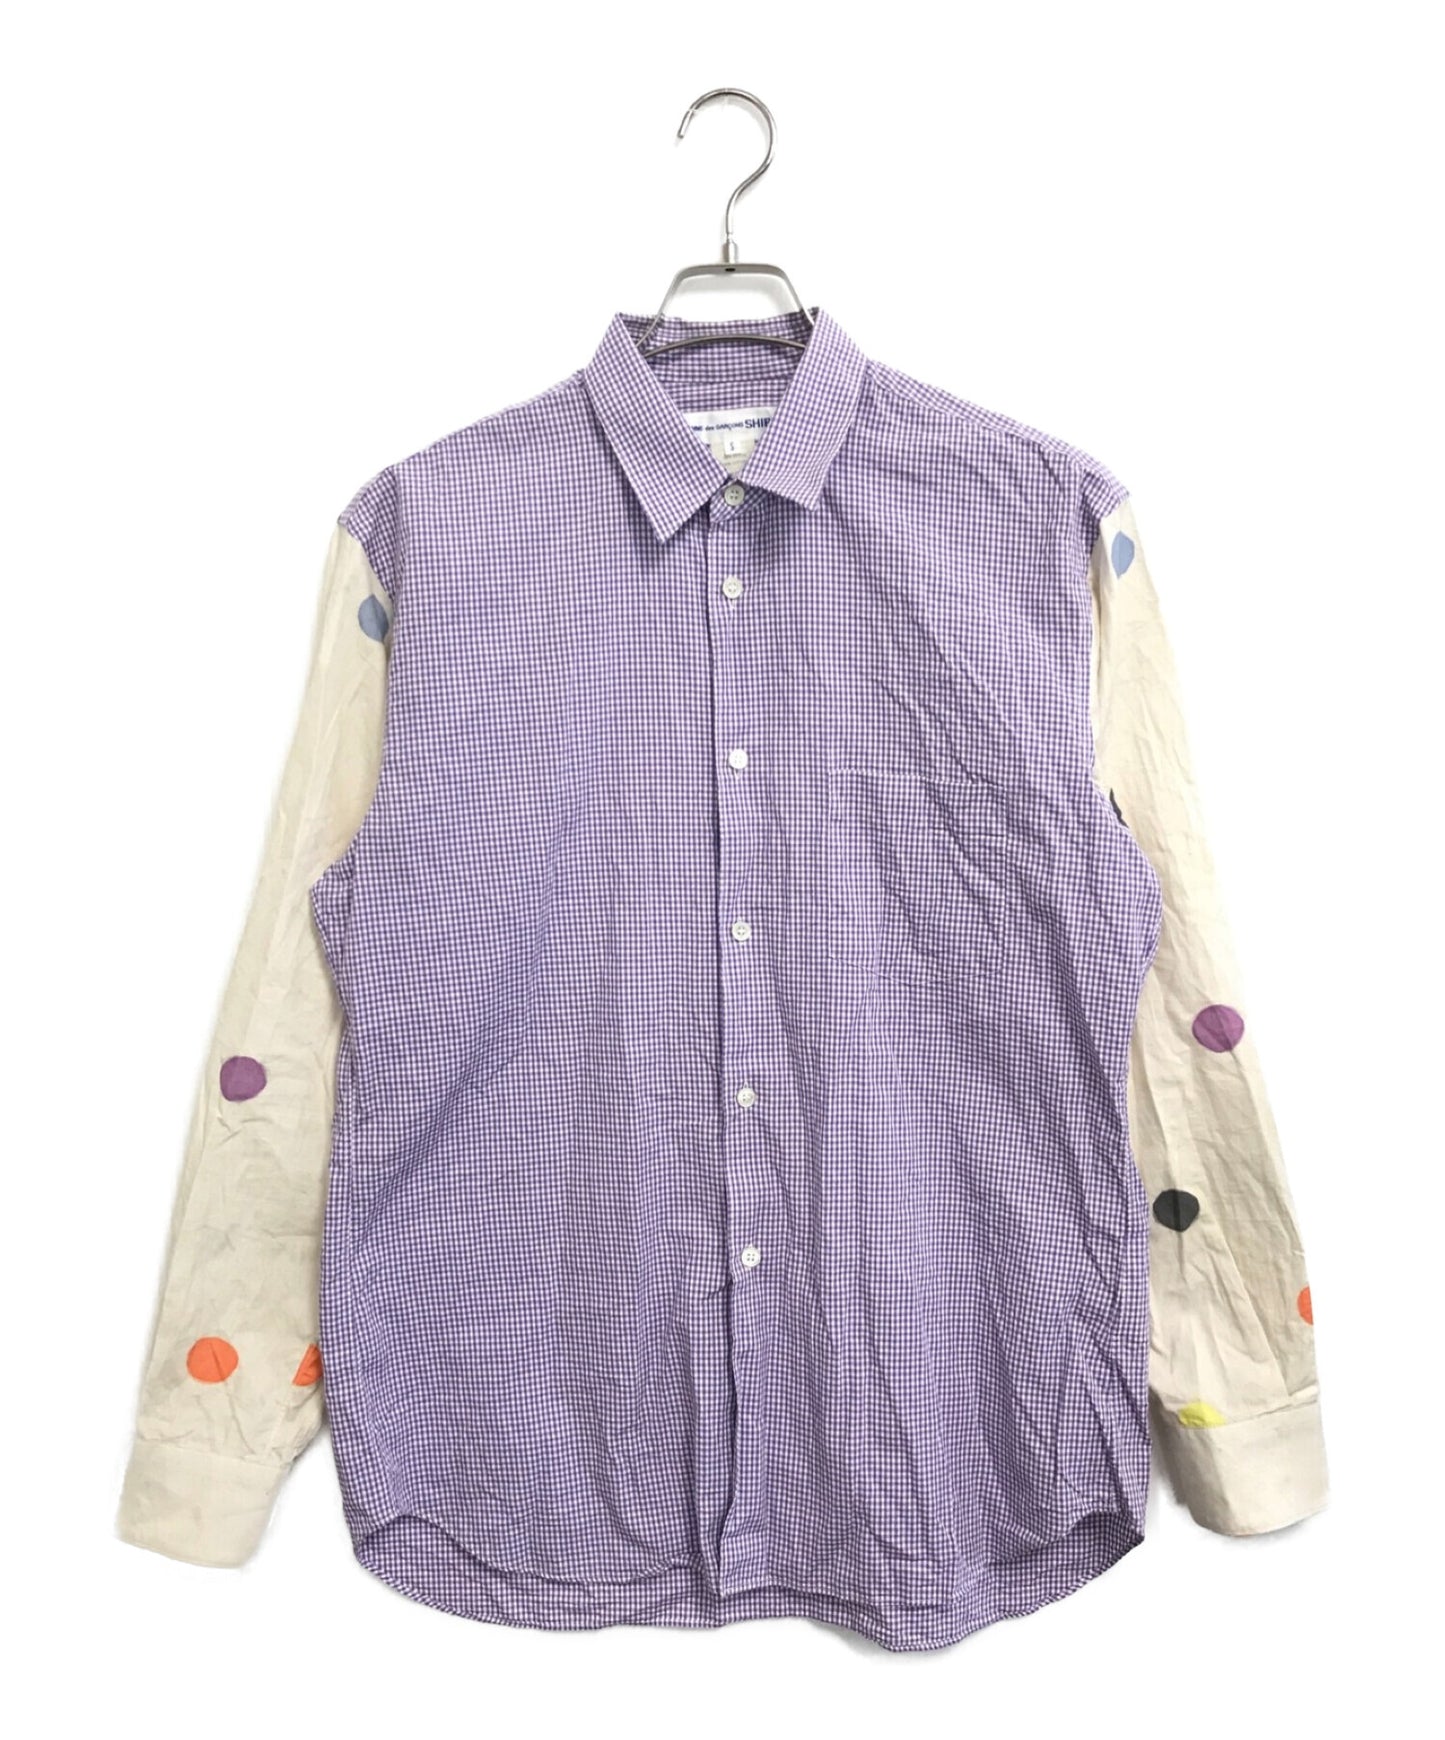 Comme des Garcons เสื้อ Mary Heilmann Dotted Check Shirt S26048